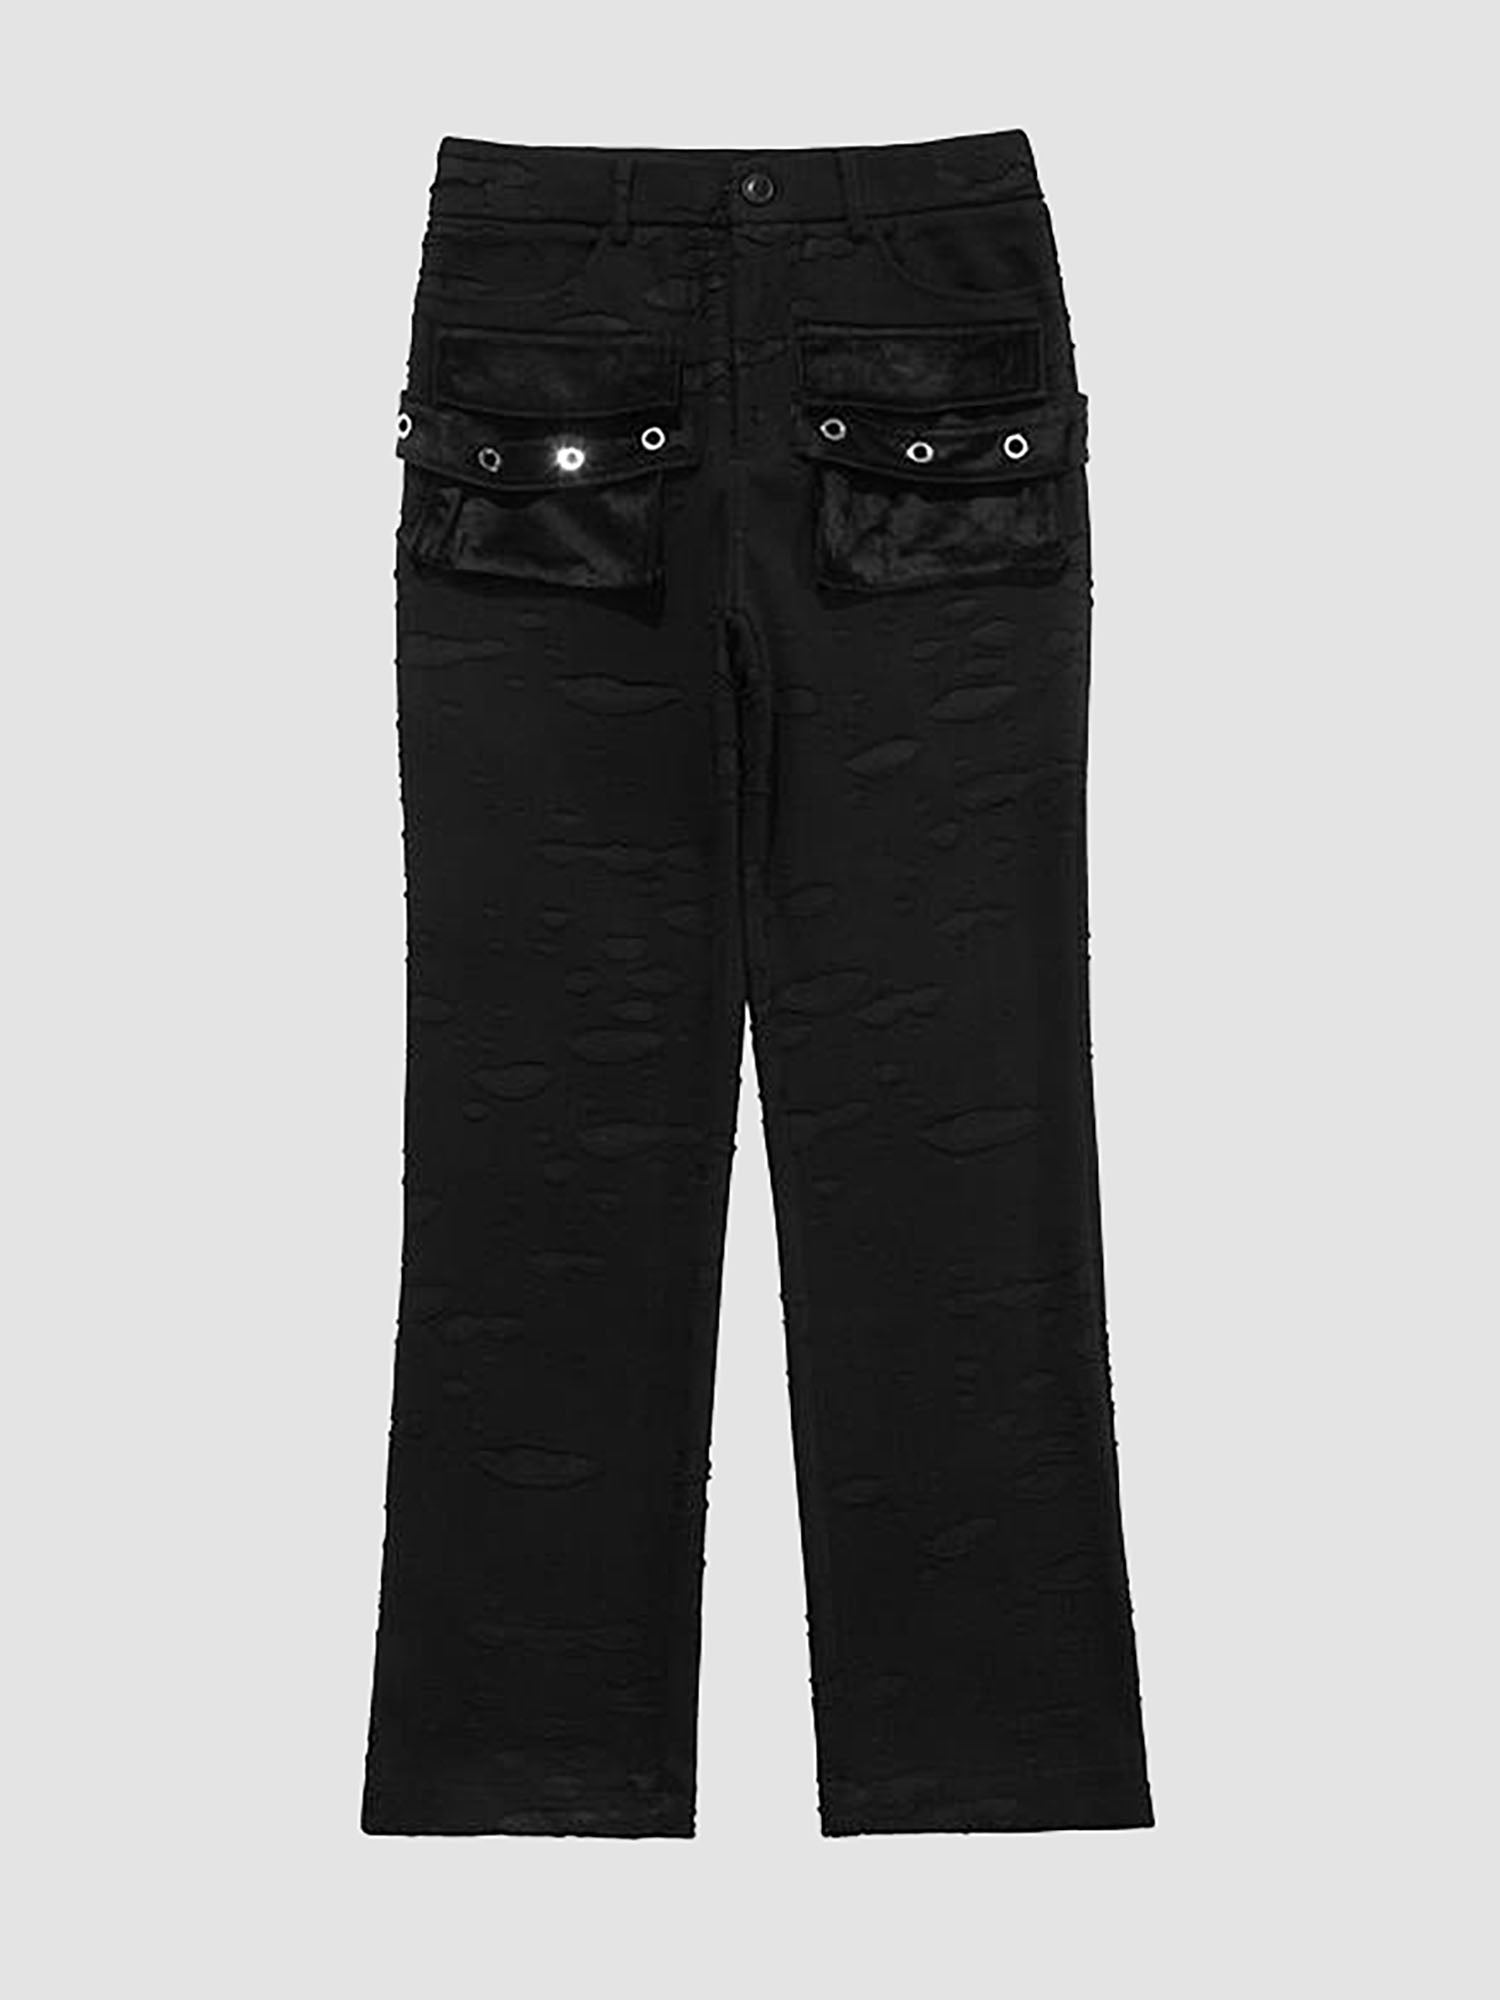 JUSTNOTAG Washed Destroyed Flare Pants Taschen Lässige Micro Flared Sweatpants Streetwear Slim Fit Zipper Joggers